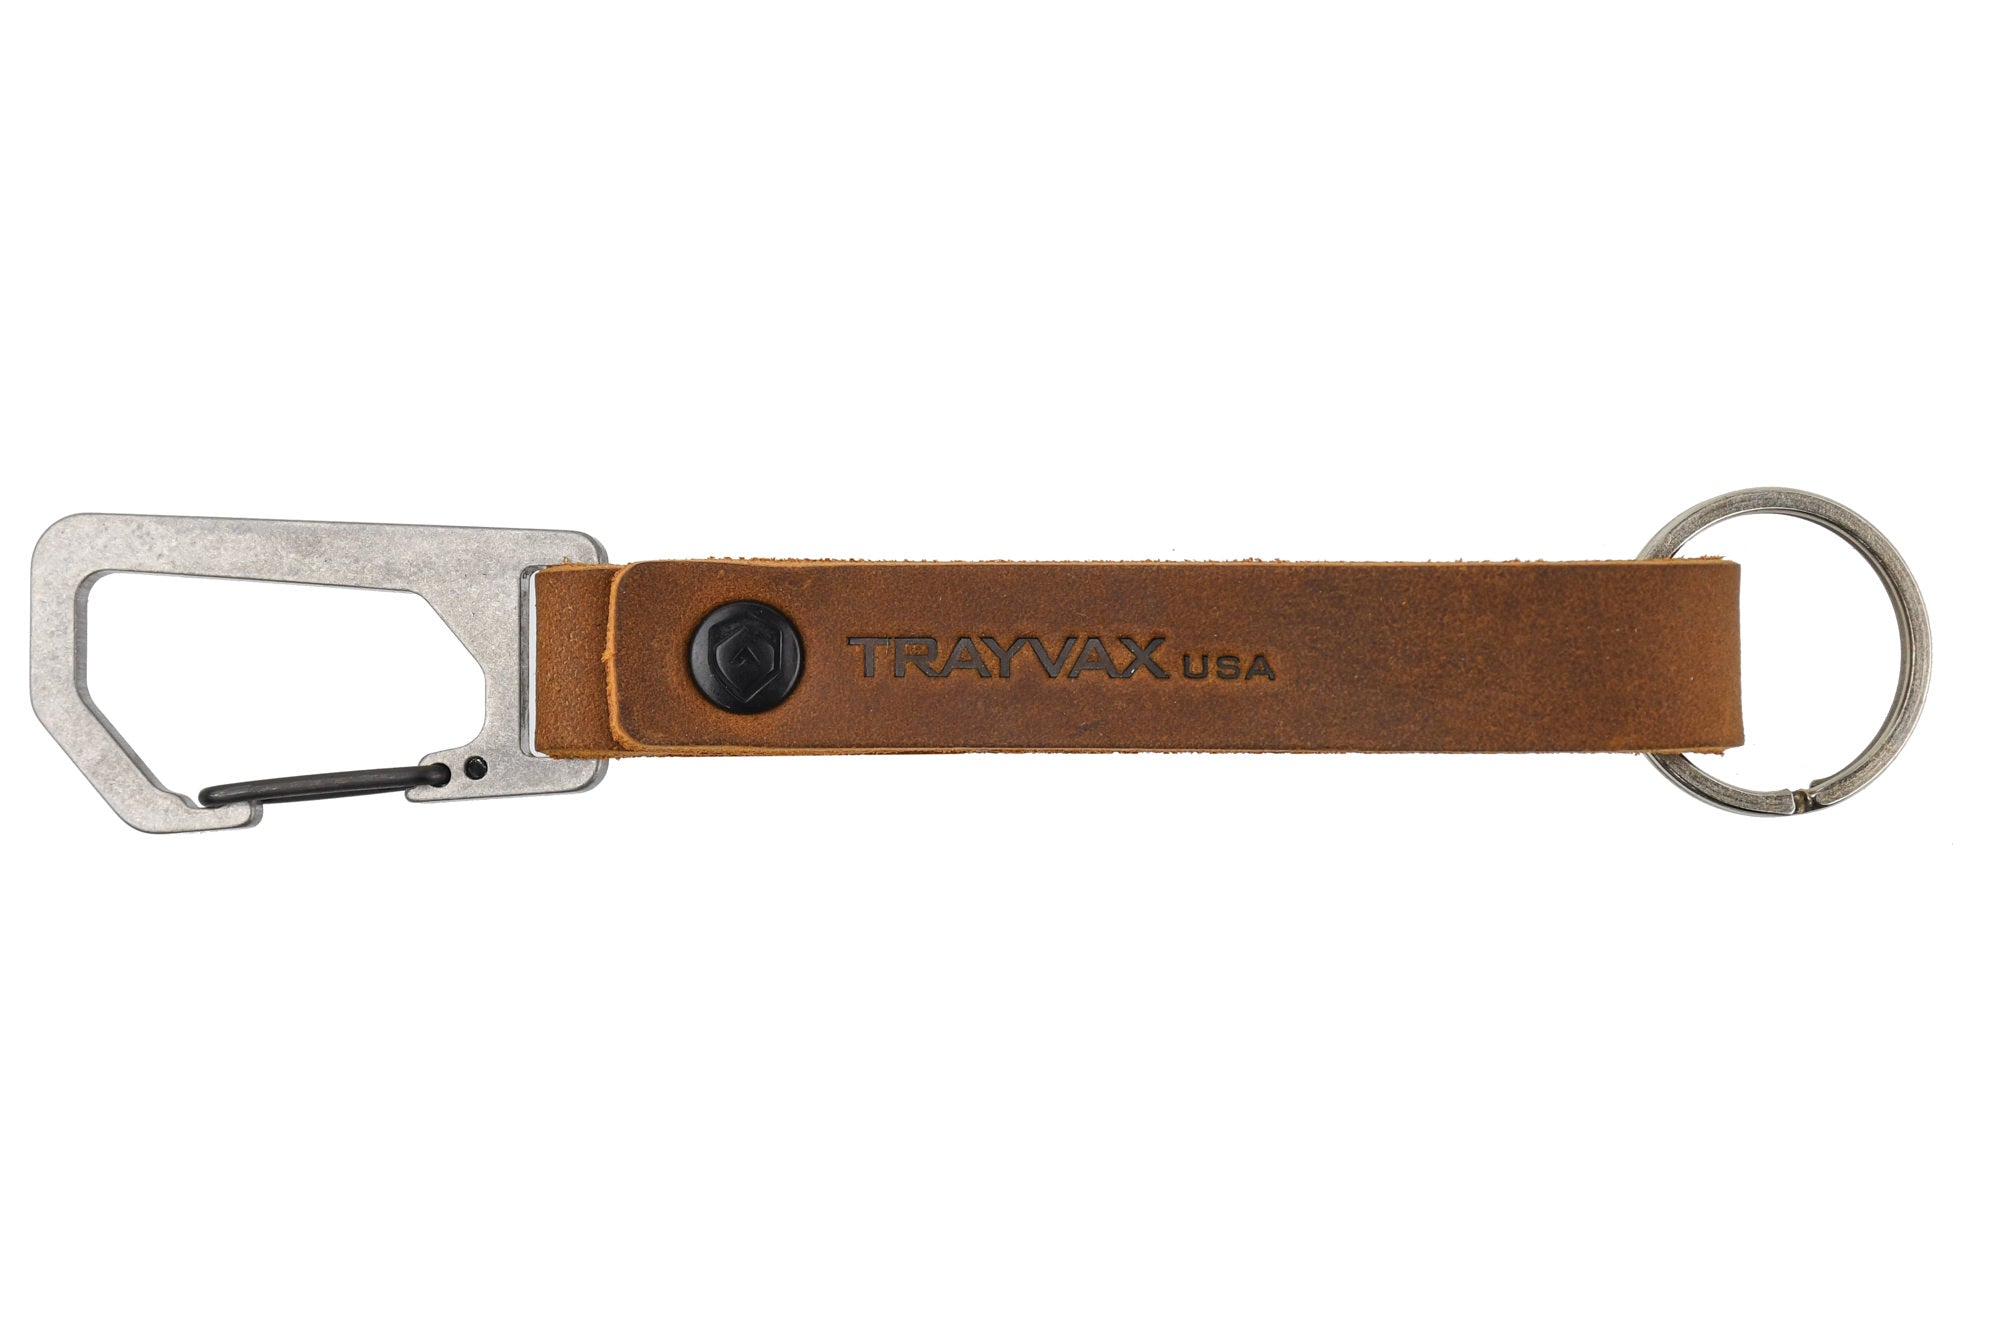 Key-bak Pocket Chain Belt Clip